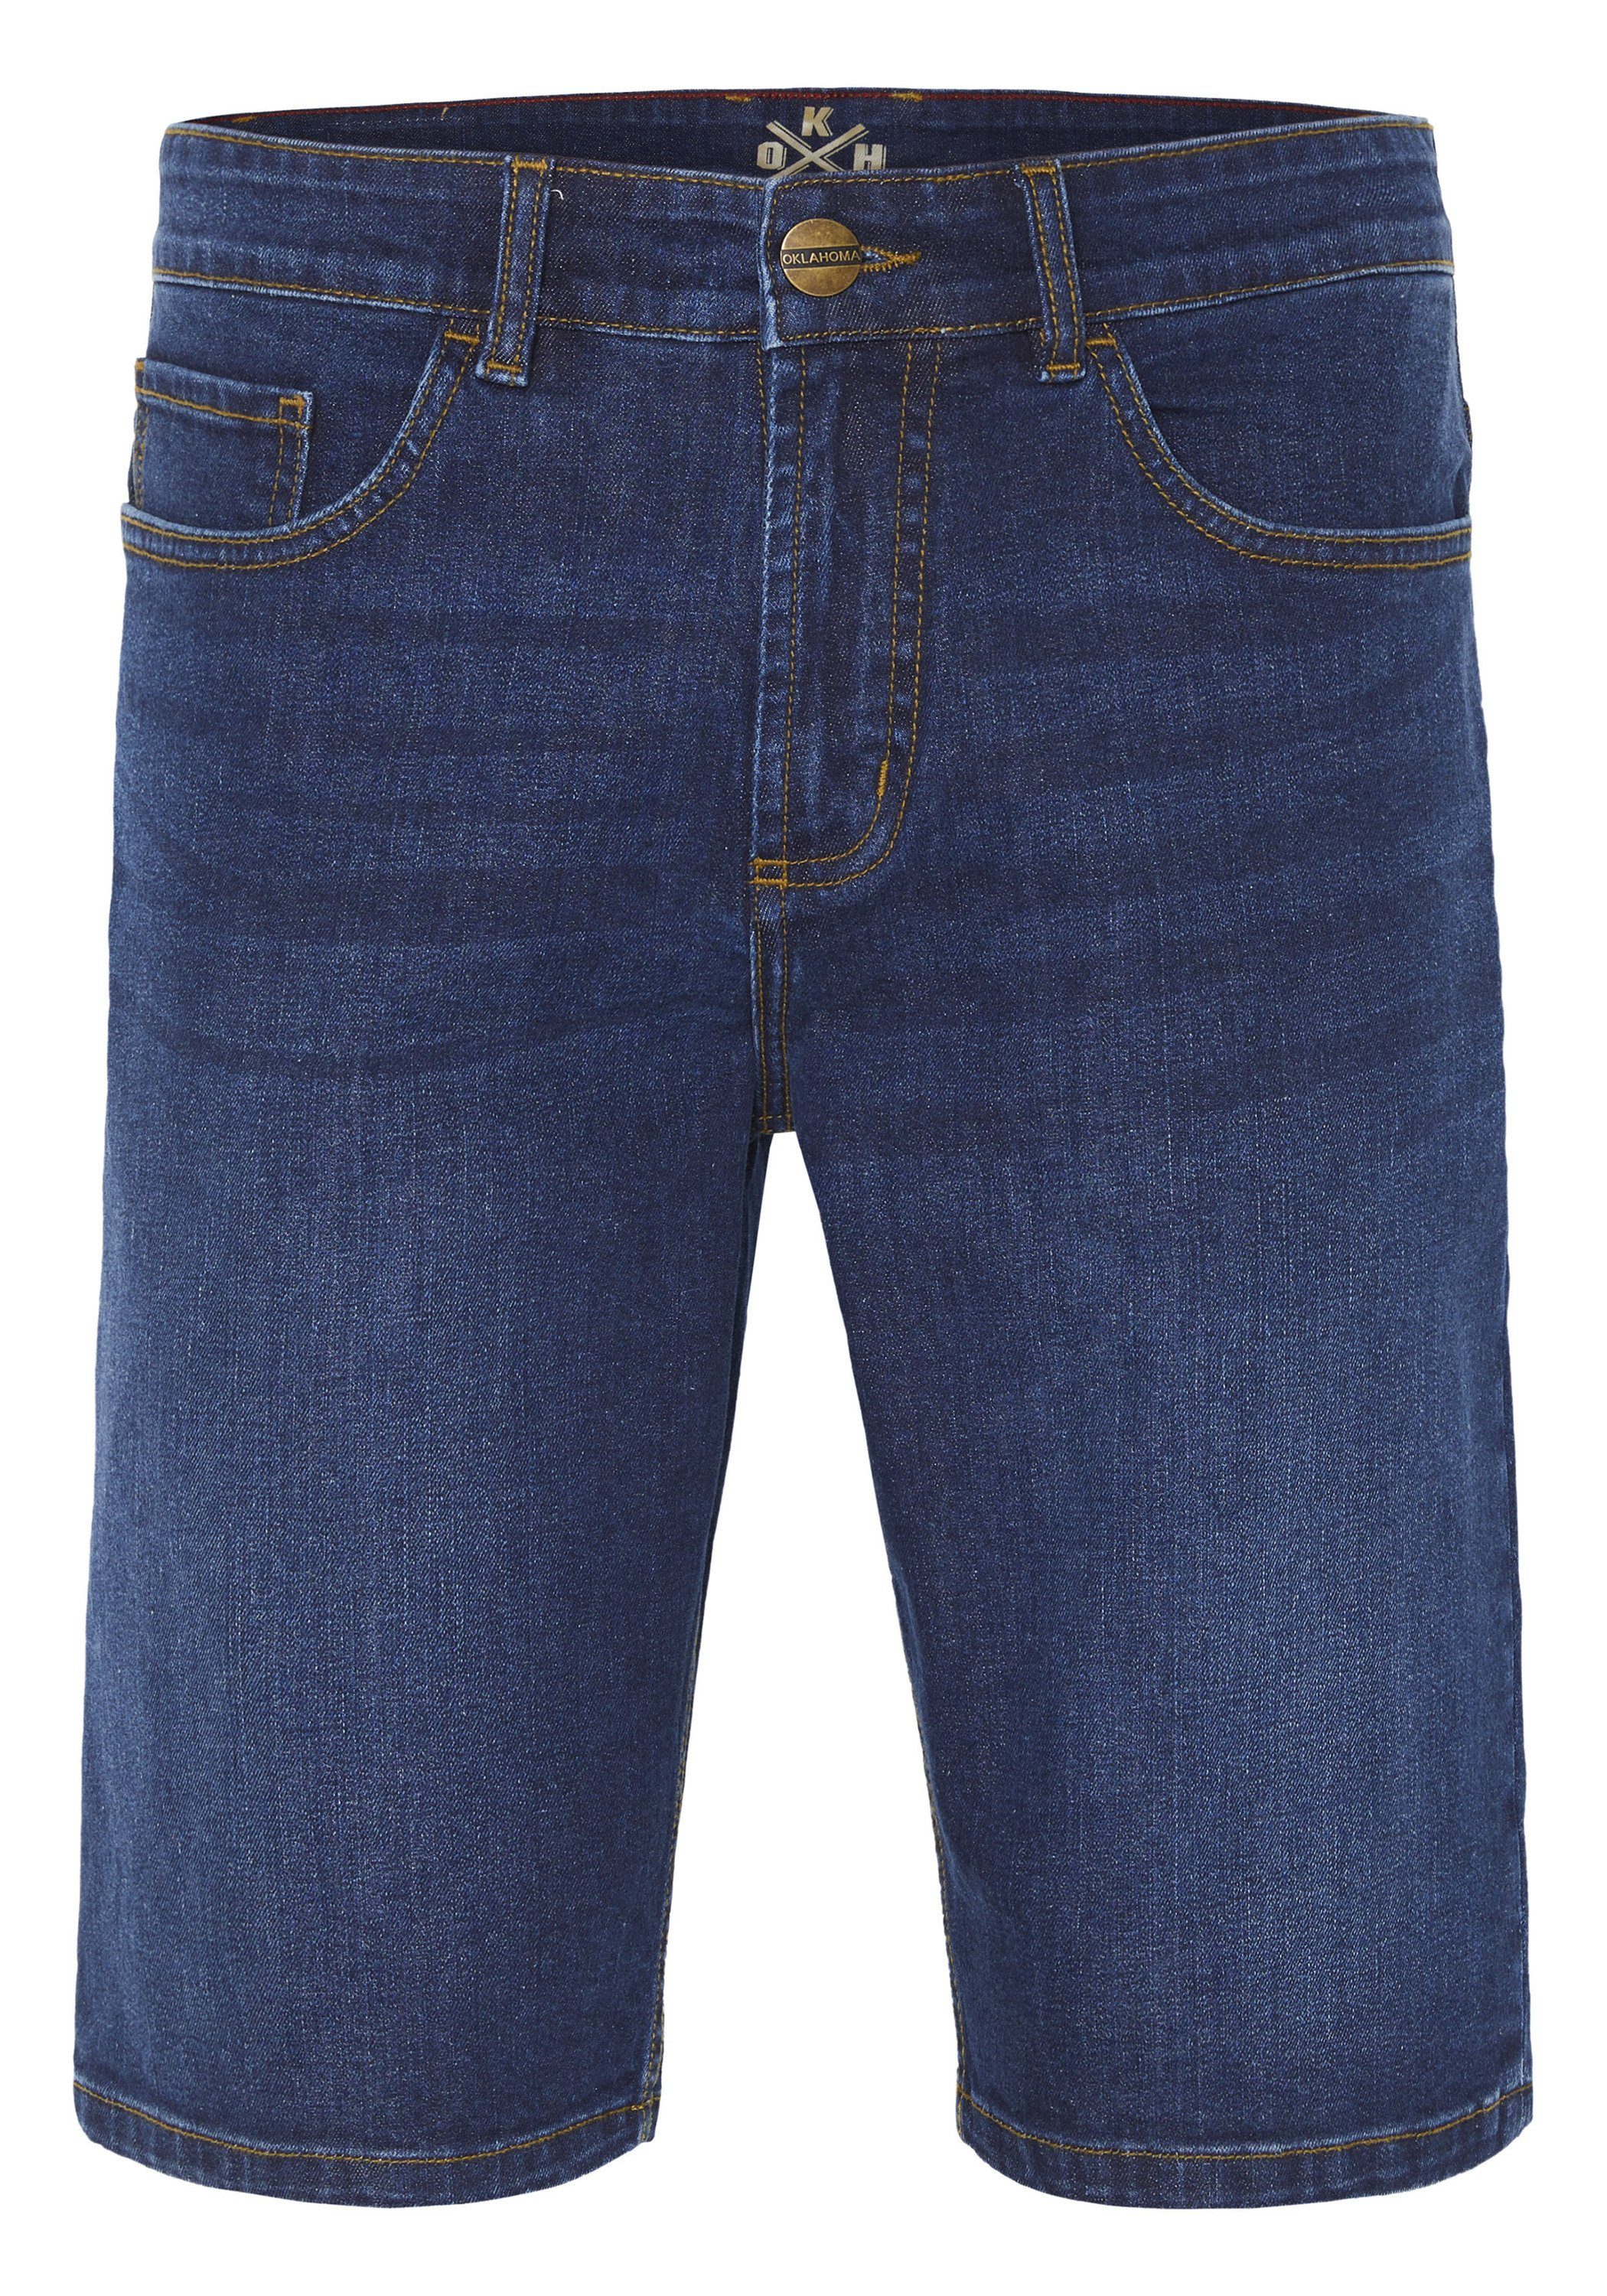 Boutique Oklahoma Jeans Bermudas aus elastischem Denim